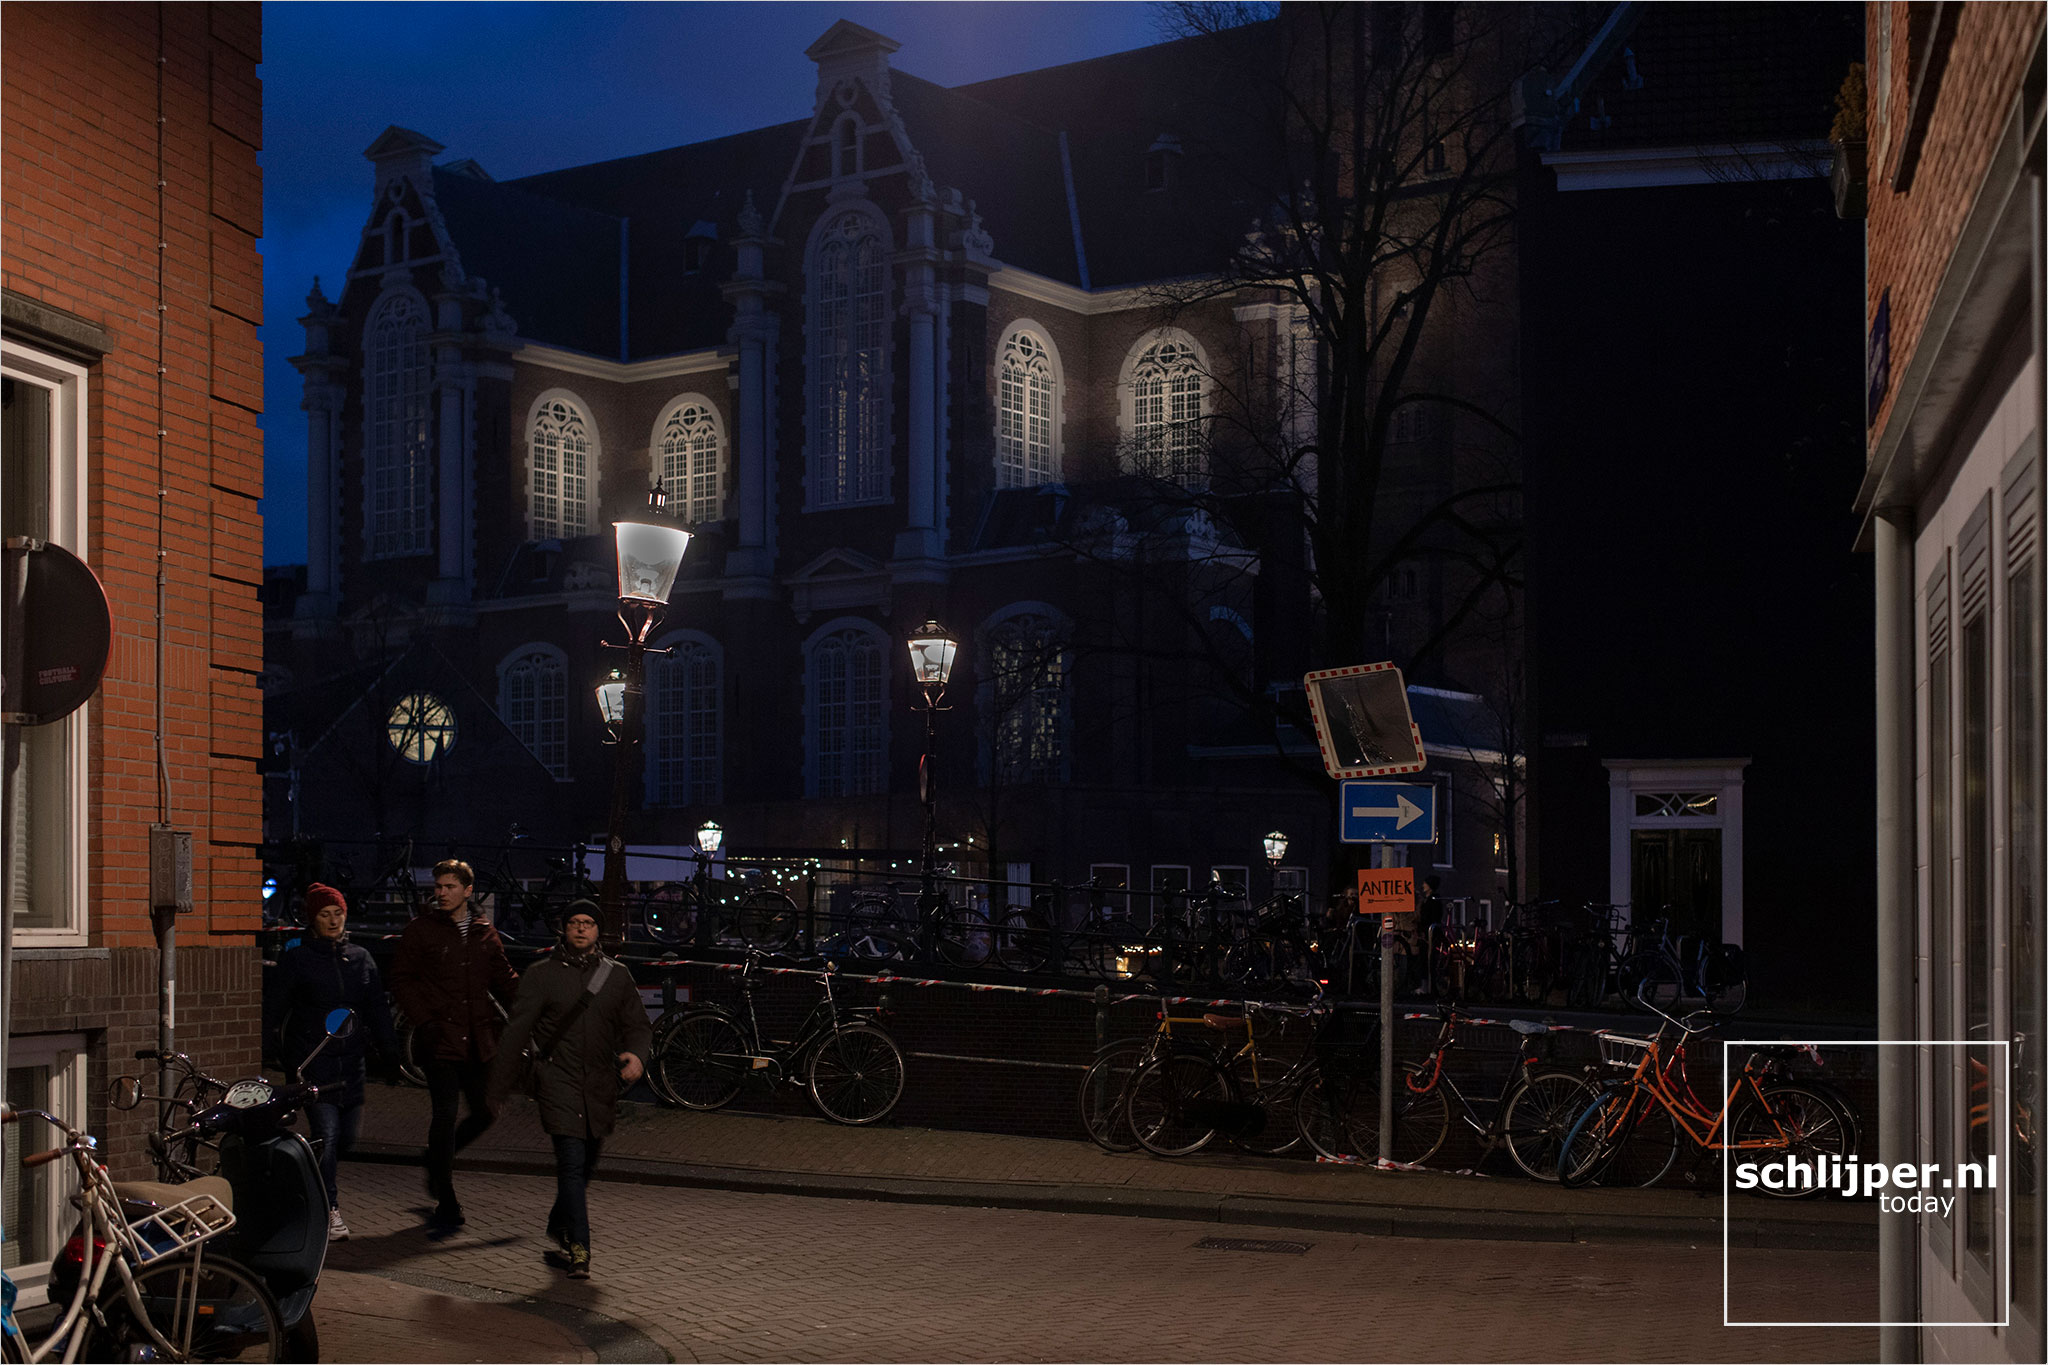 The Netherlands, Amsterdam, 5 december 2020